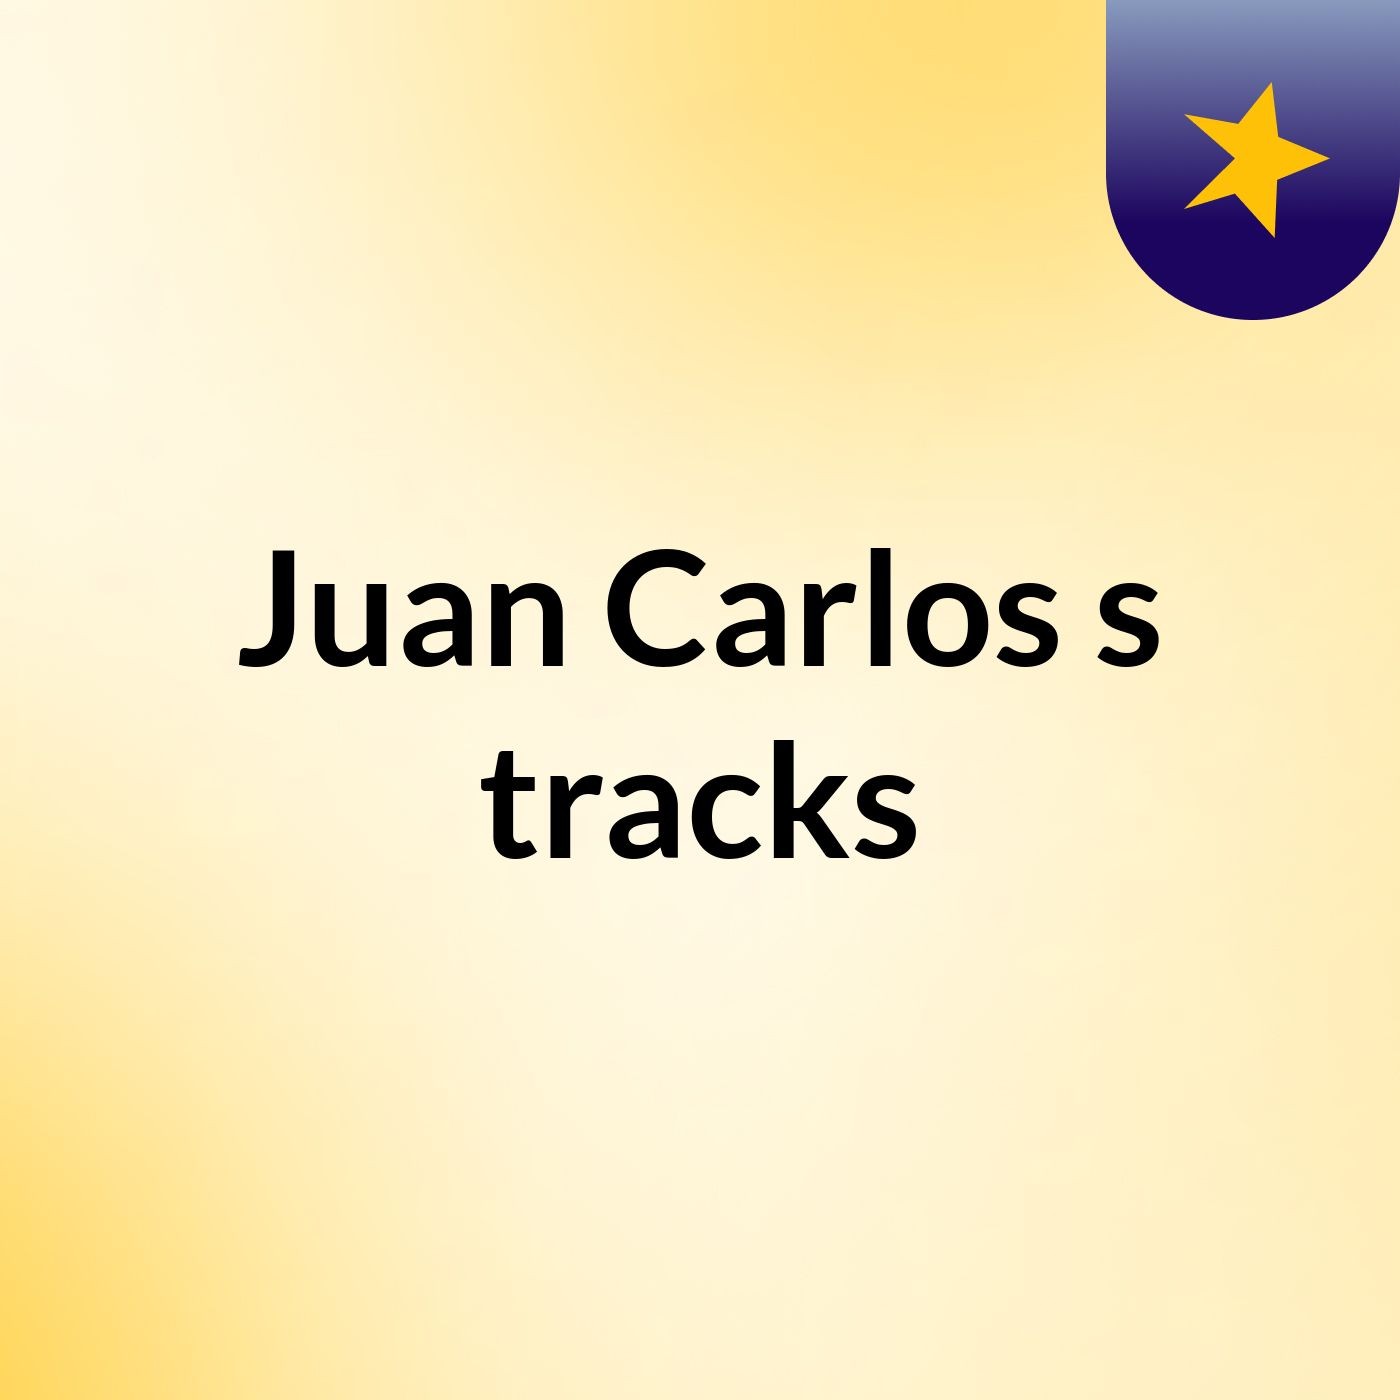 Juan Carlos's tracks